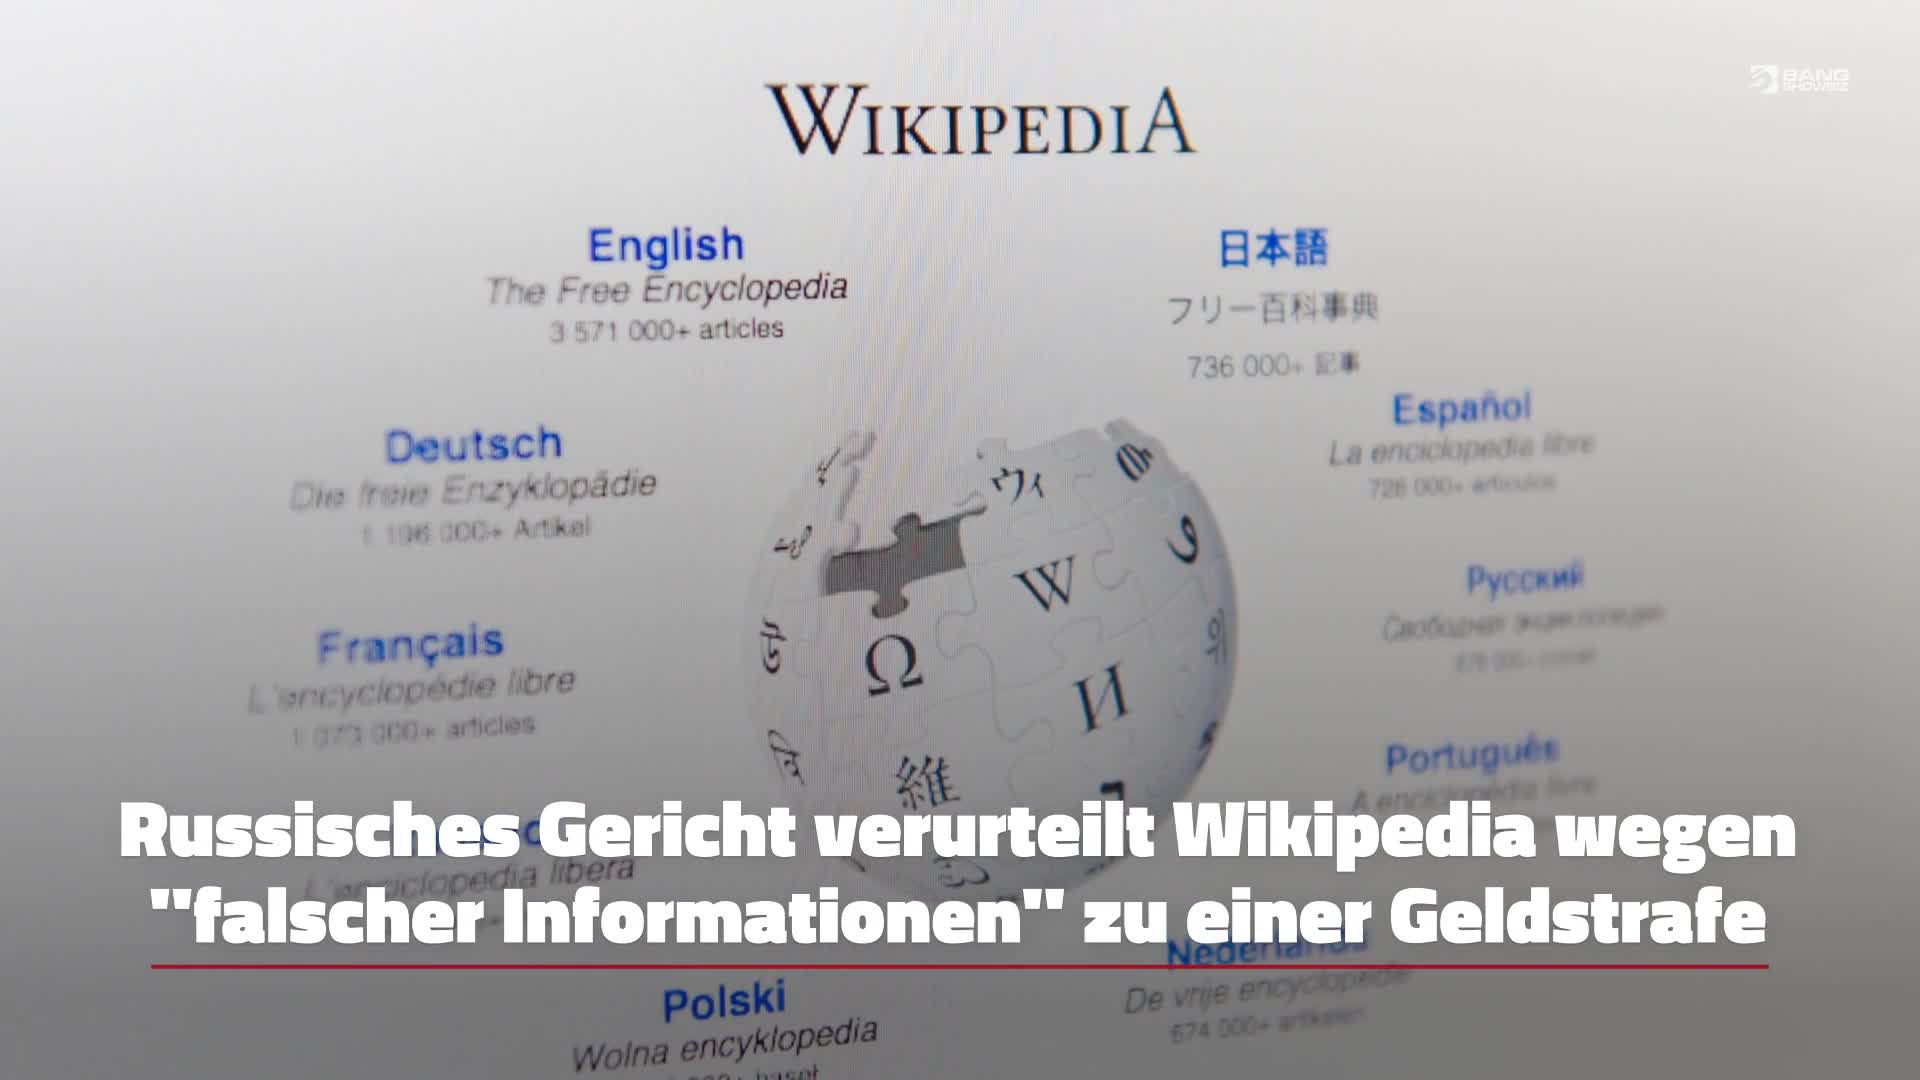 Gabe Newell - Wikipedia, la enciclopedia libre